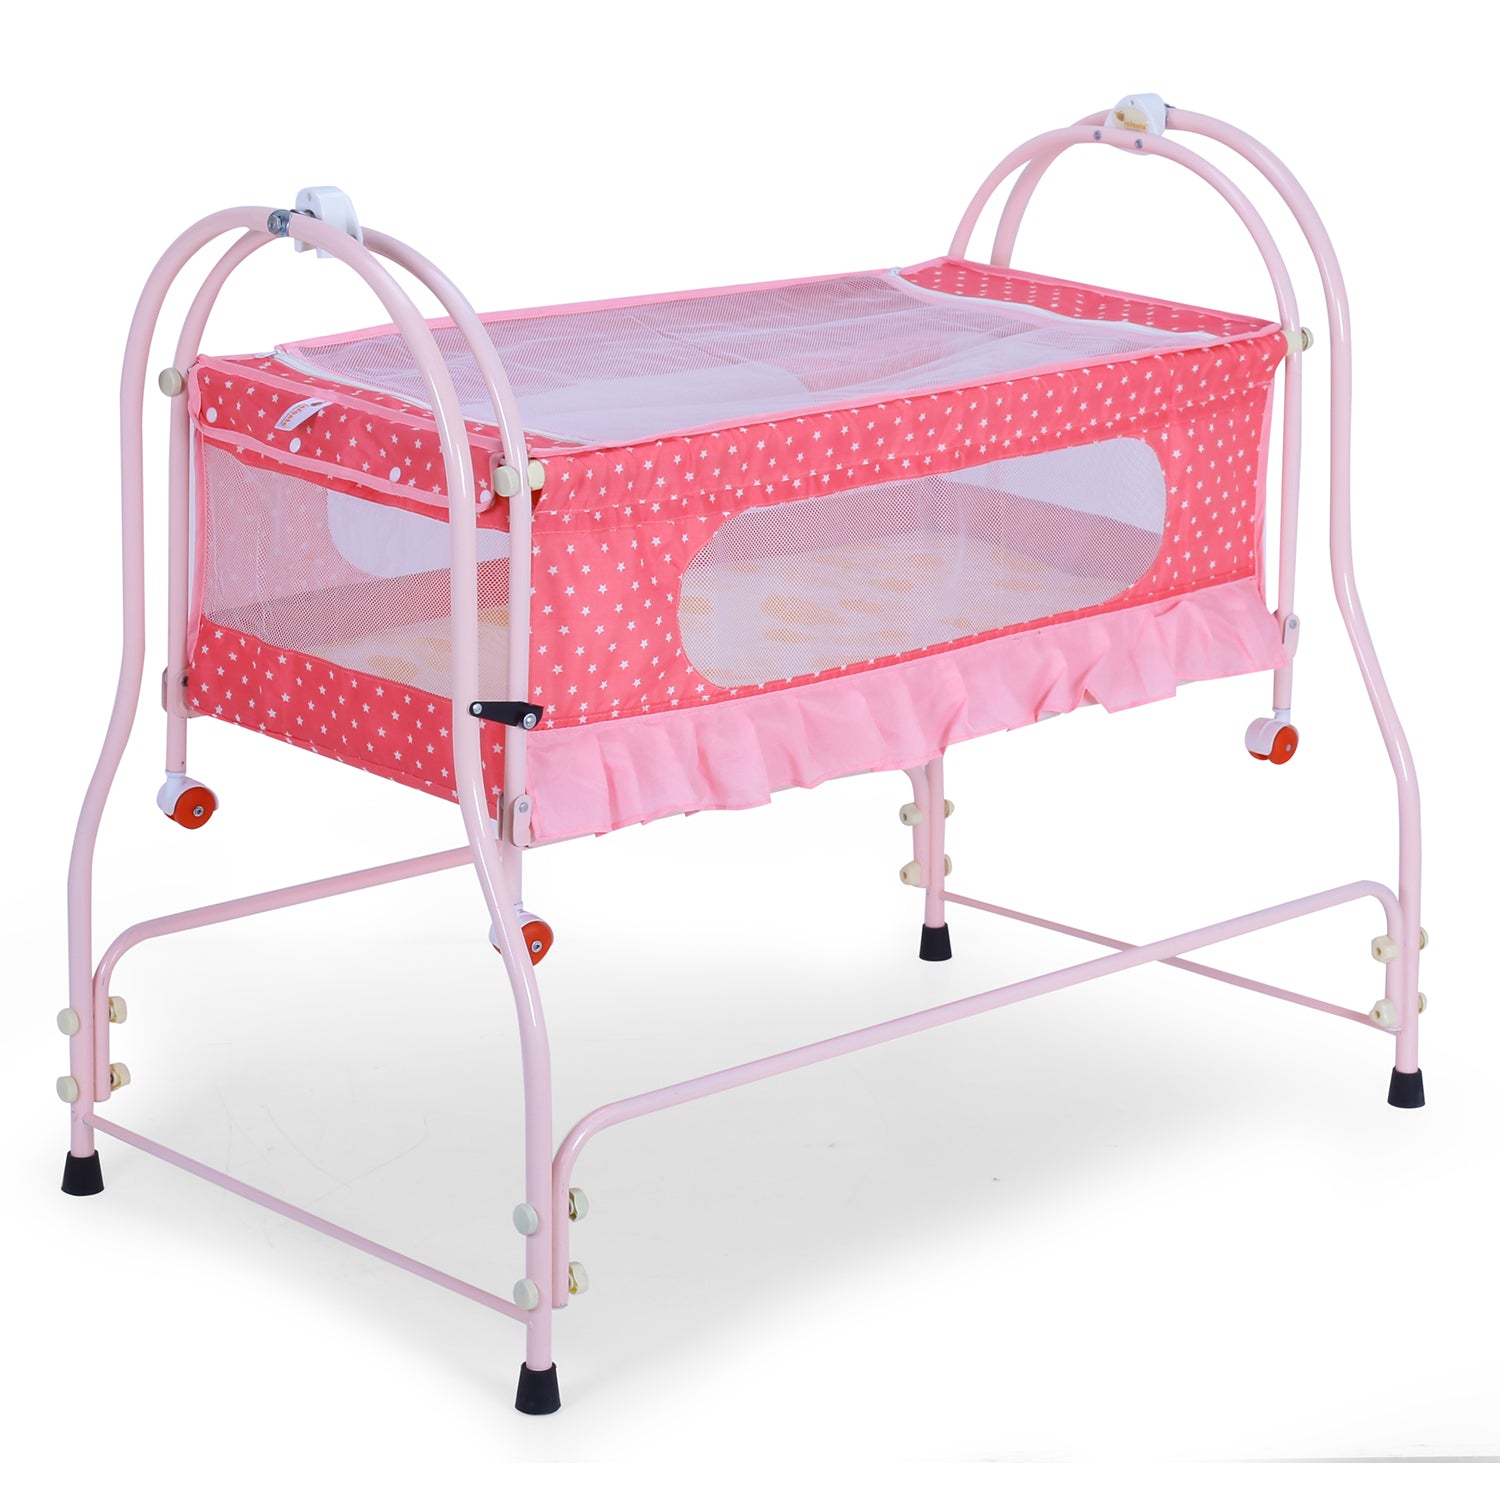 INFANTO Prima 2 in 1 Cradle for Babies | Palna | Jhula - Sturdy Metal Frame